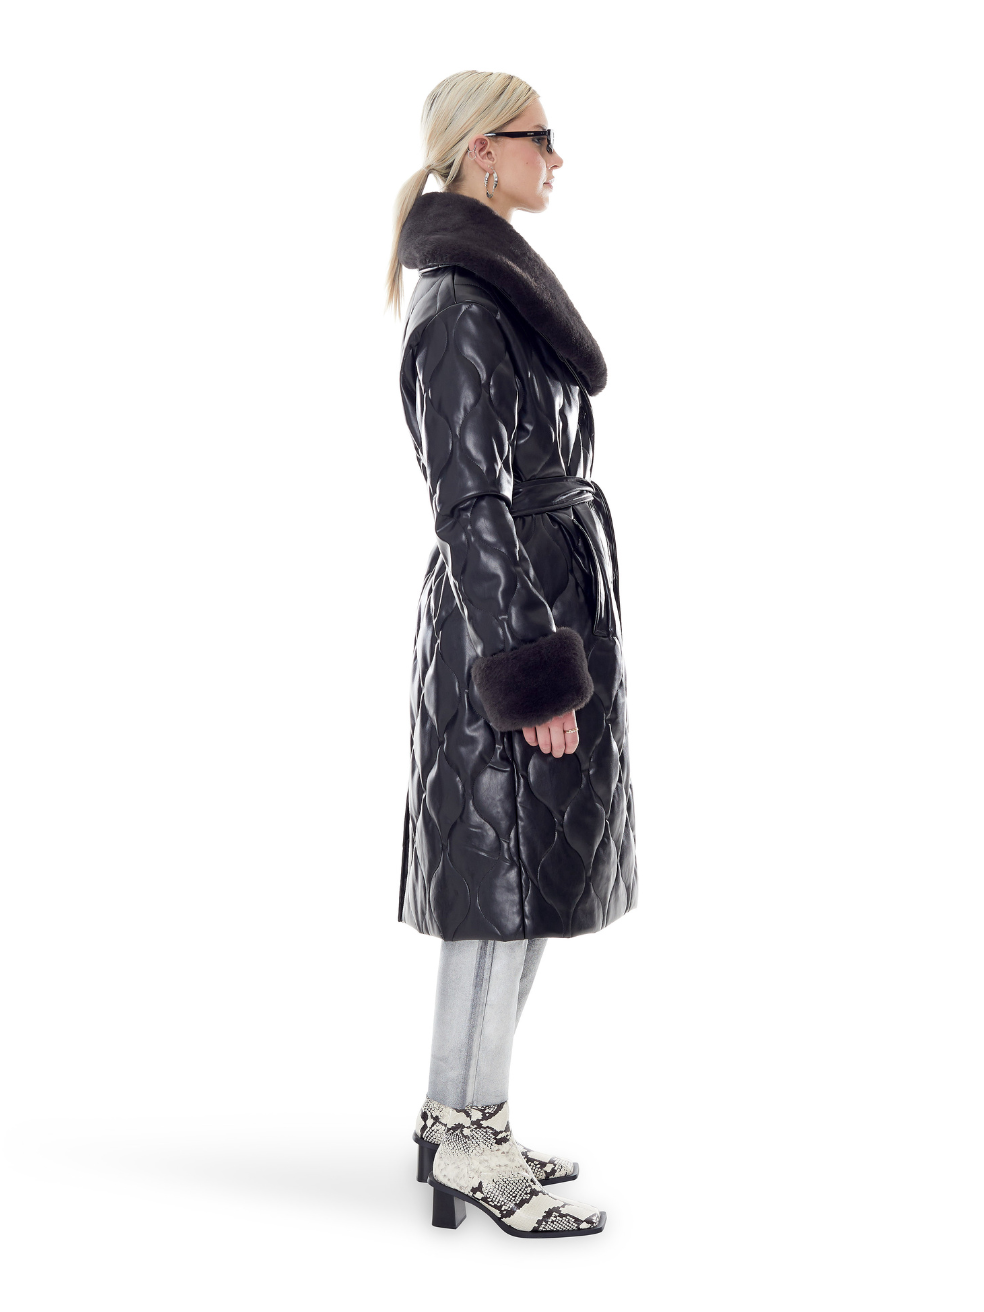 Carrie Matte Black Stormi Vegan Leather Zero Waste Luxury Fashion Made in Canada